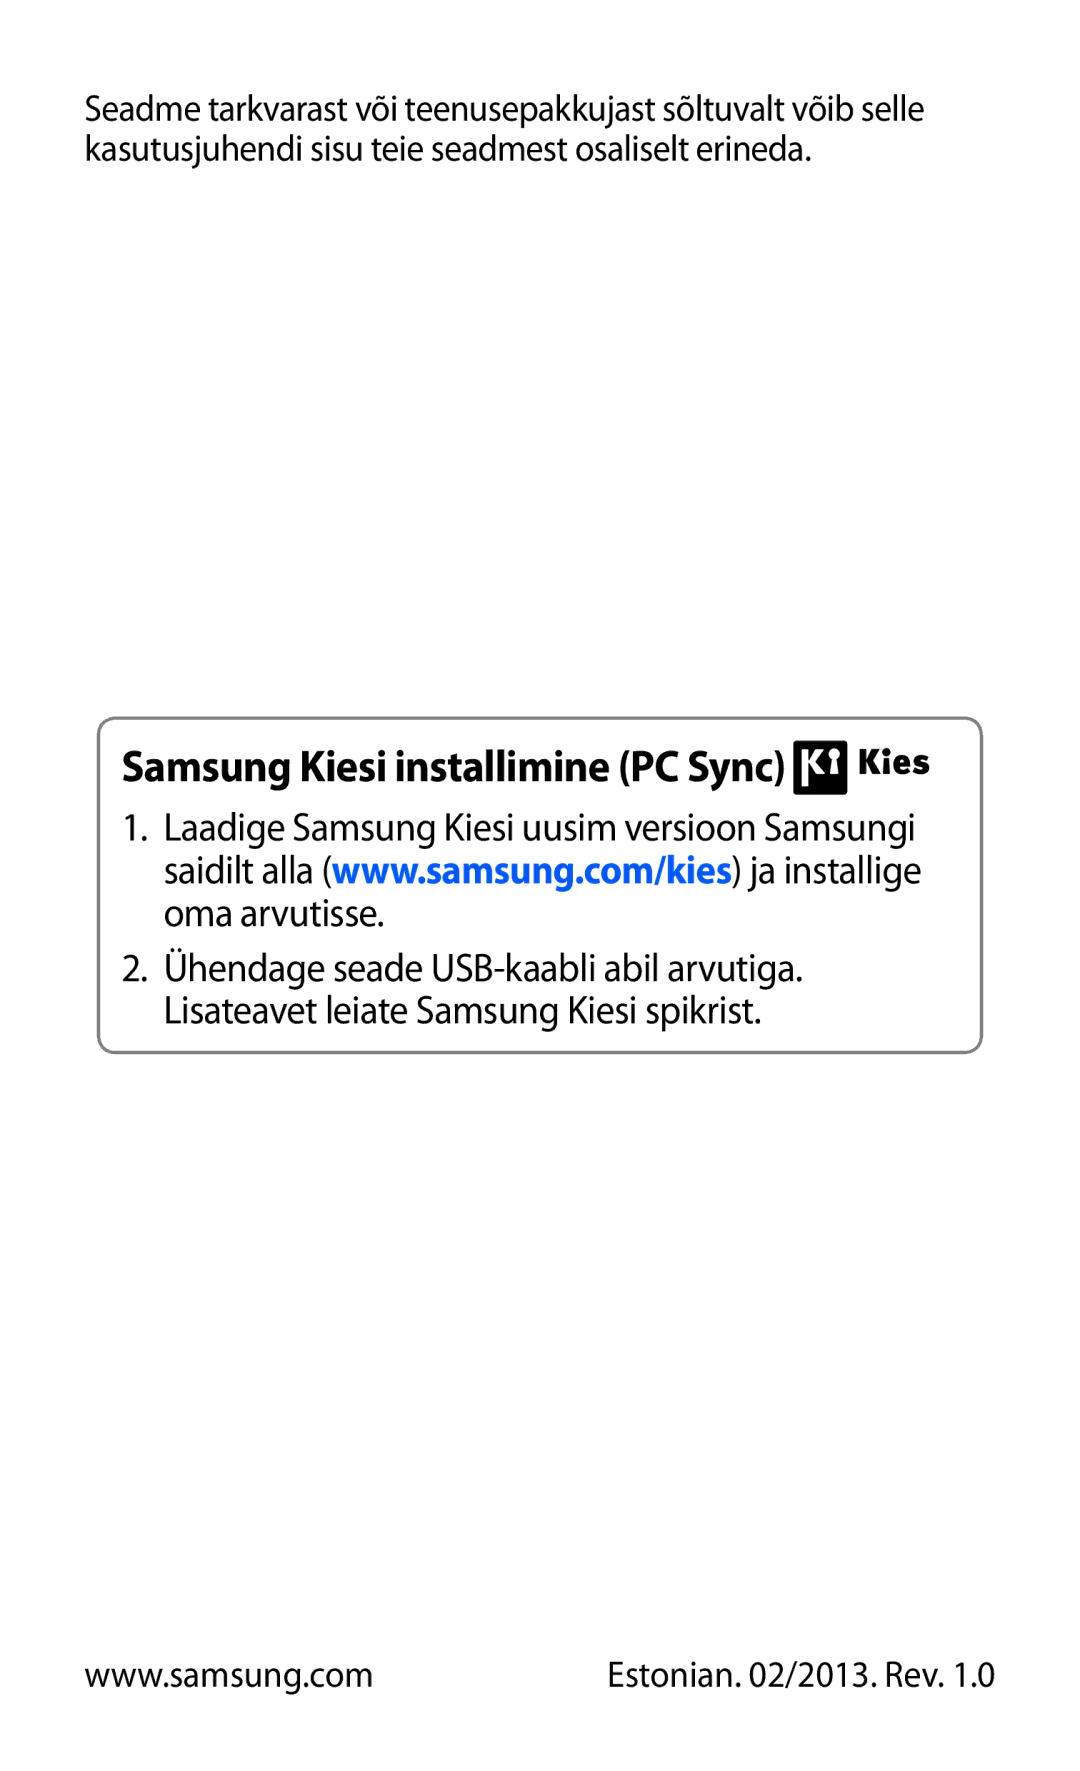 Samsung GT-S5301ZWASEB, GT-S5301ZKASEB manual Samsung Kiesi installimine PC Sync 